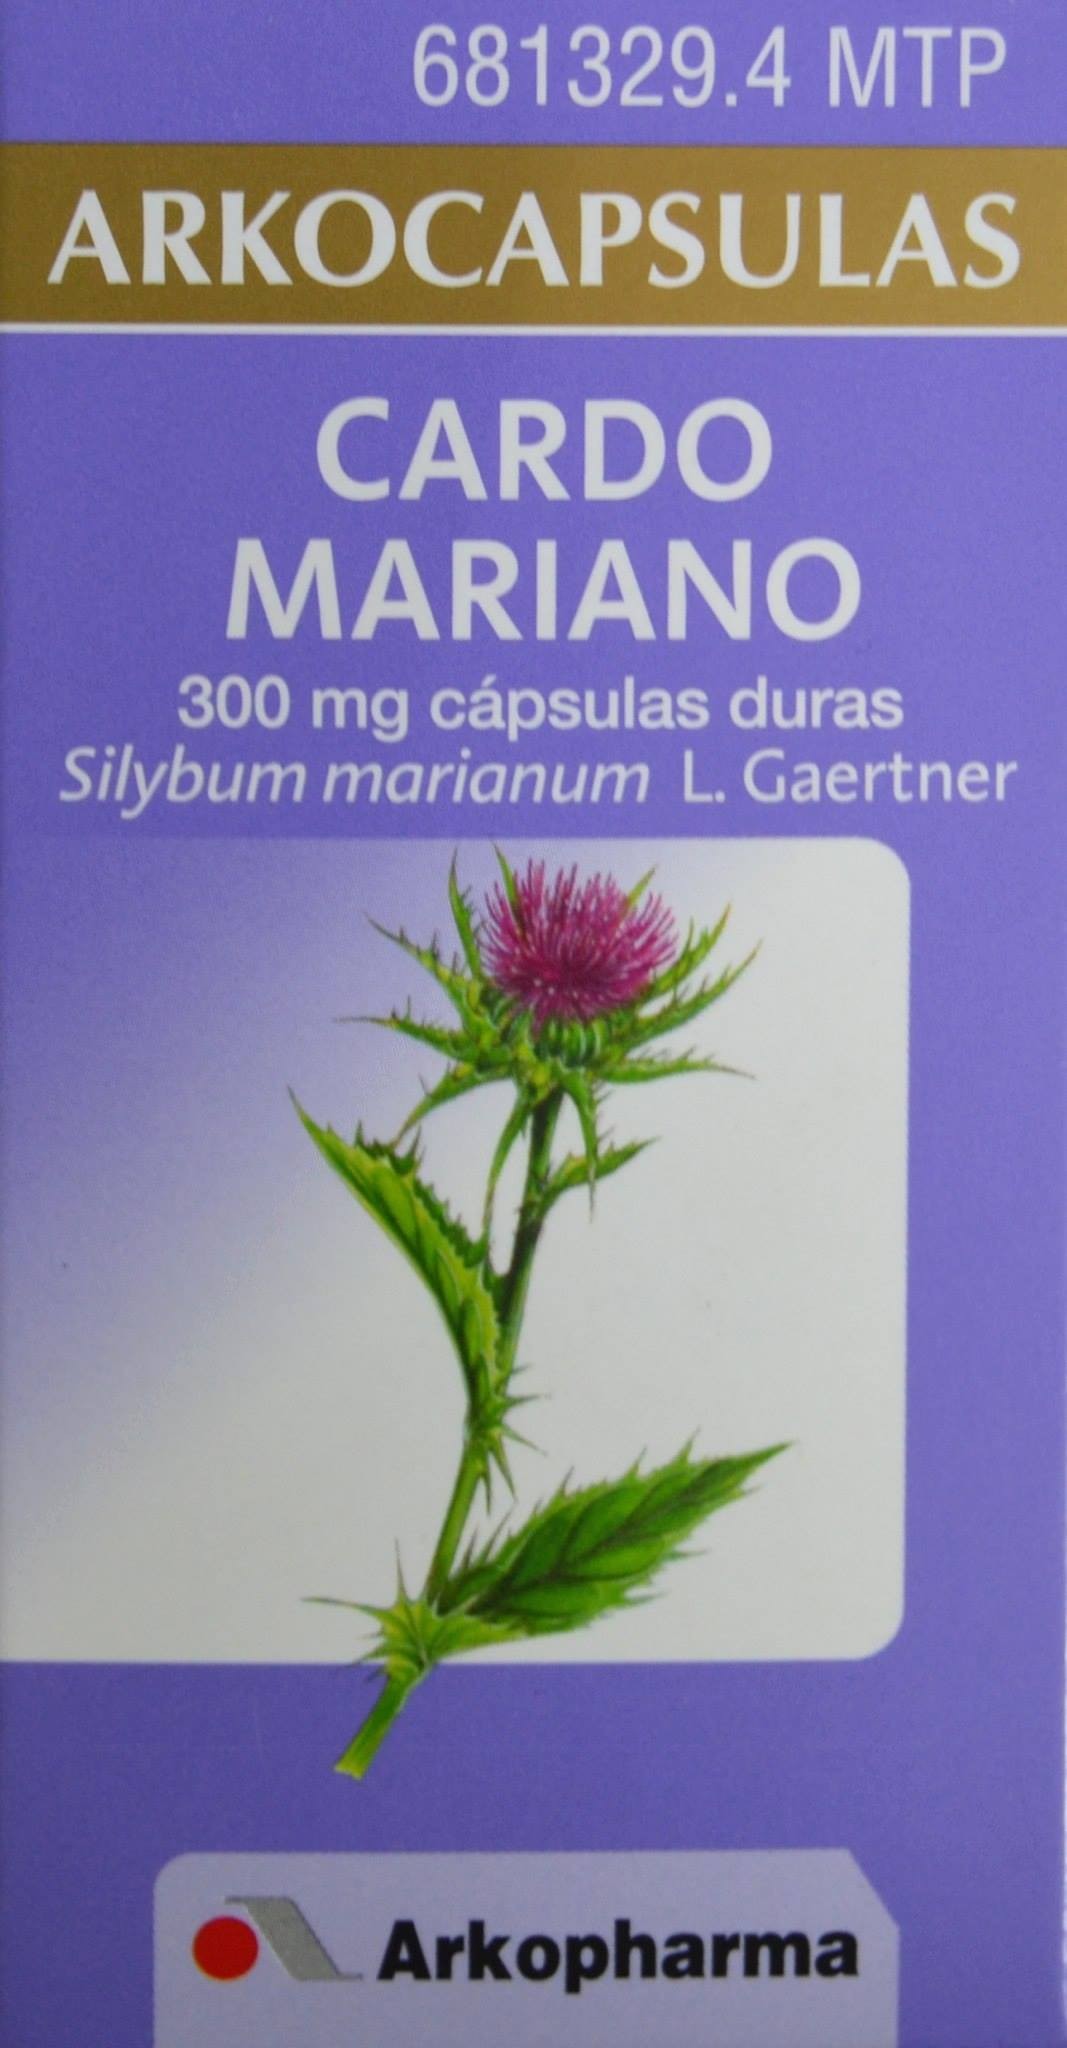 CARDO MARIANO ARKOCAPSULAS 50 CÁPSULAS ARKOPHARMA - Farmacia Anna Riba